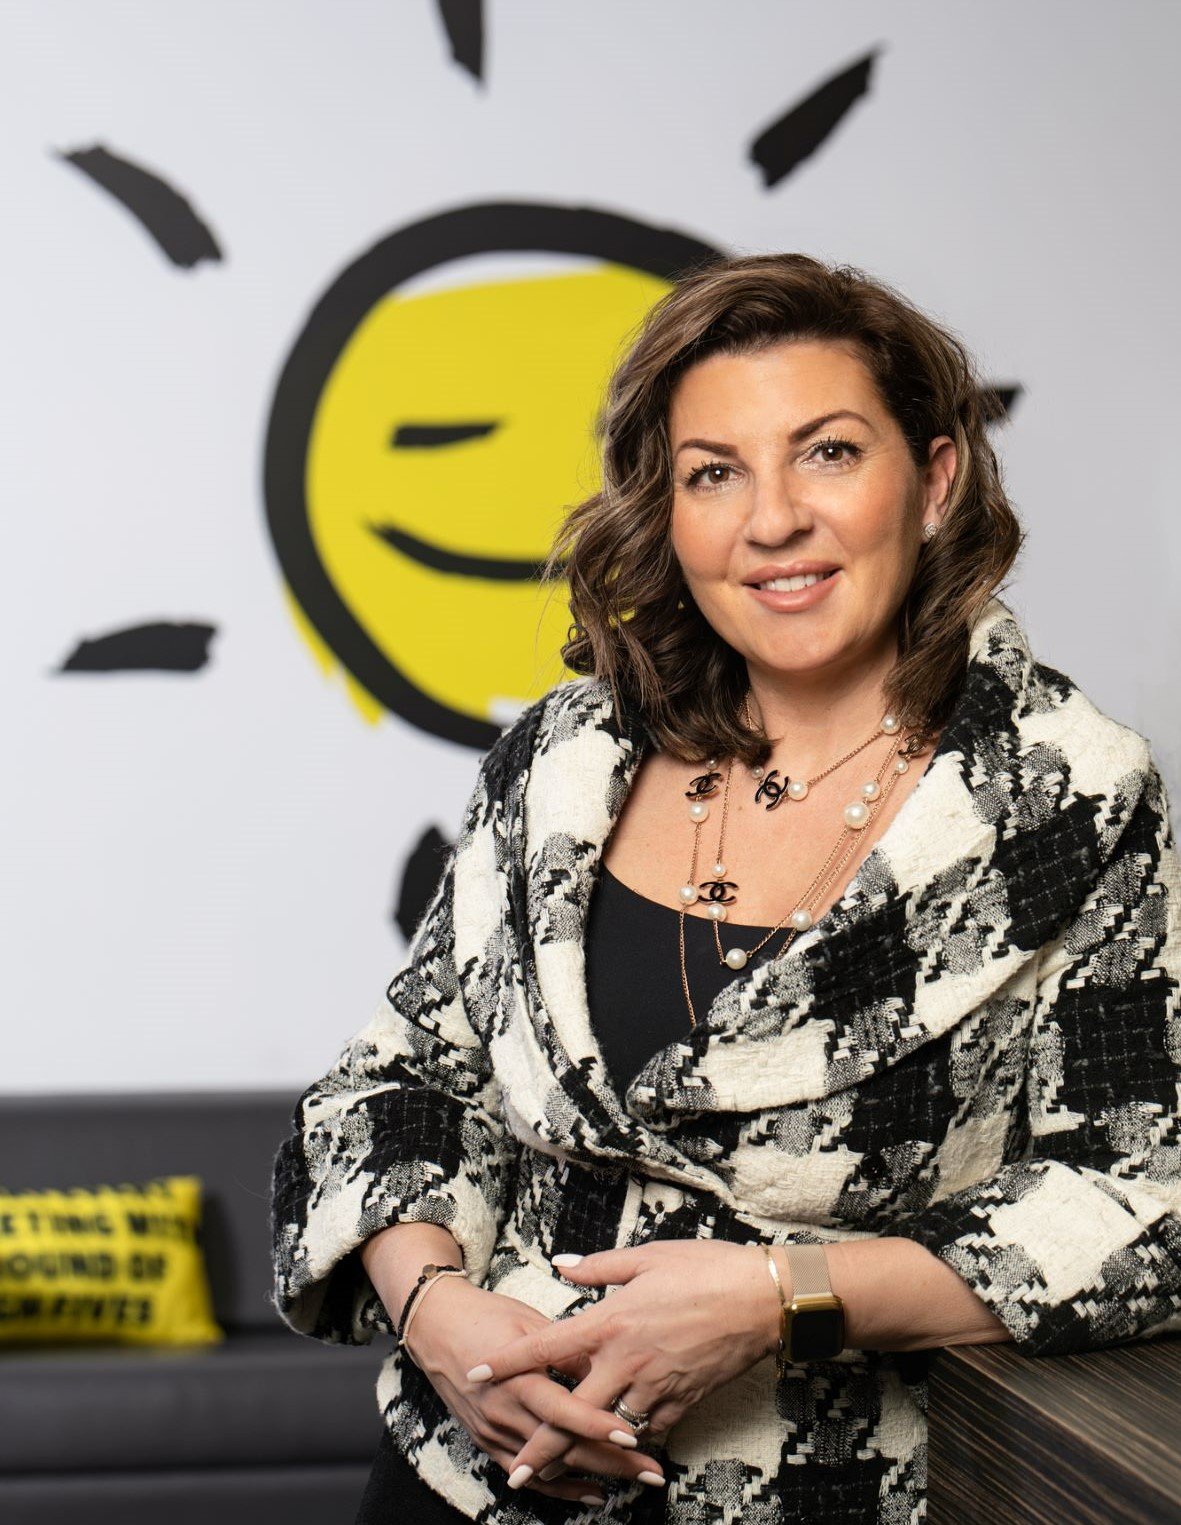 Angela Bonfanti smiling and leaning against a desk